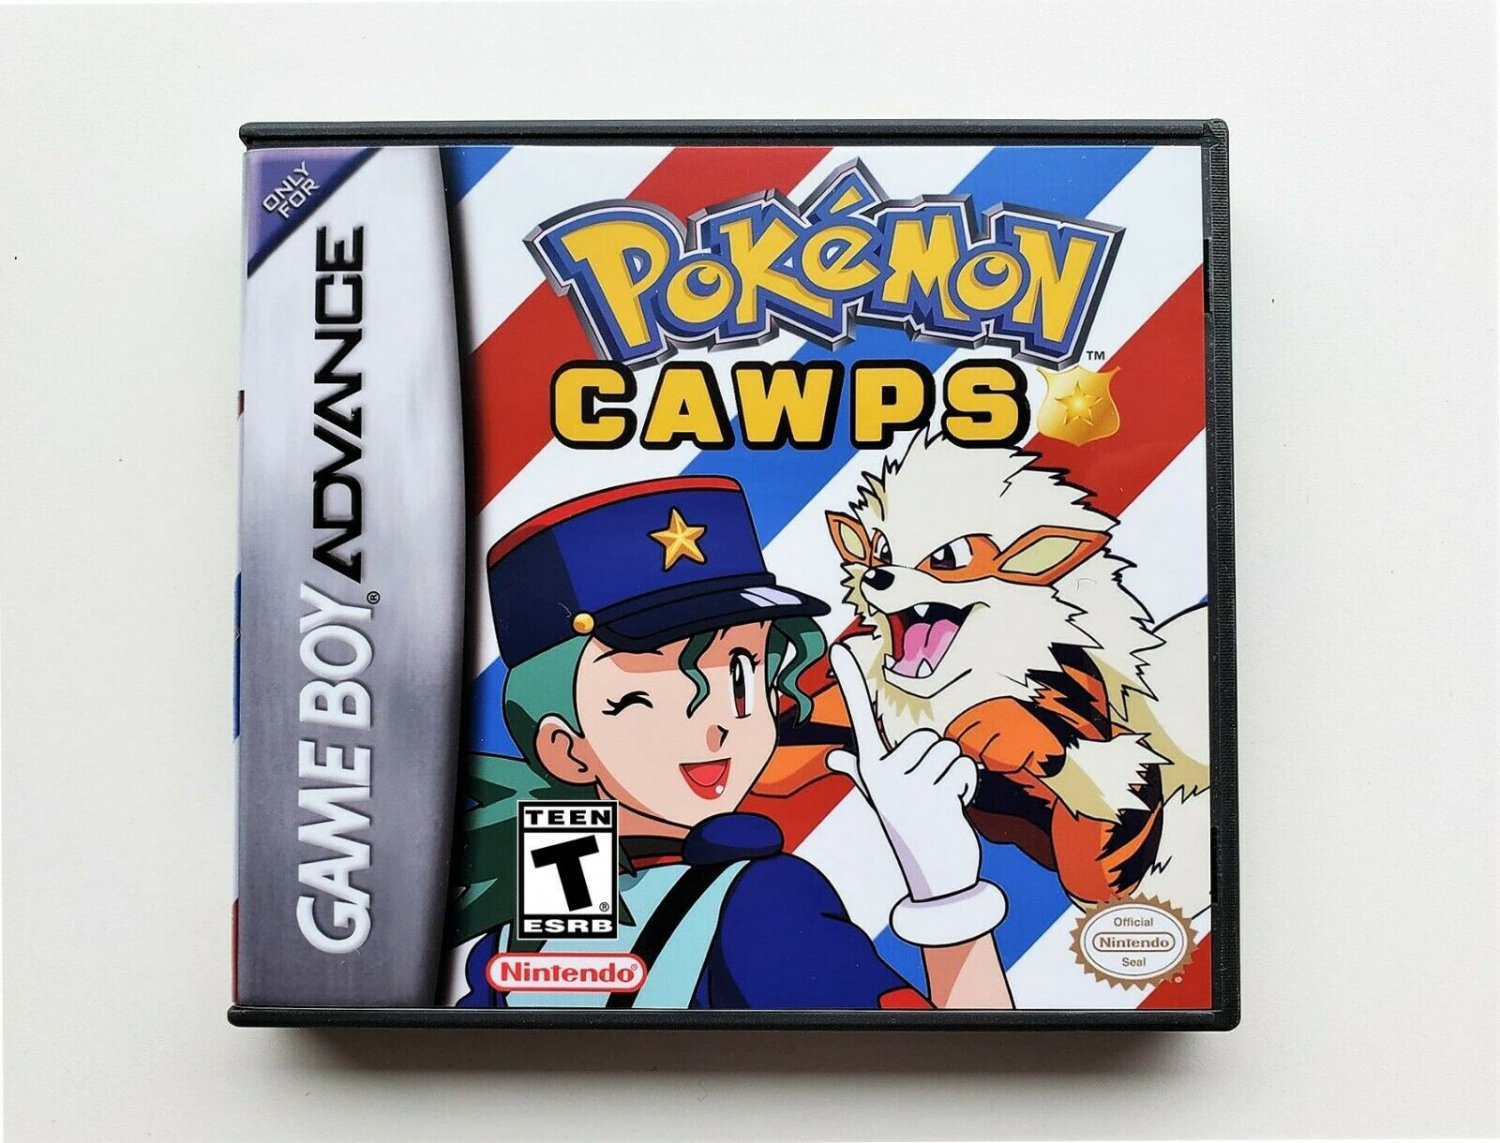 Pokemon CAWPS "Cops" Custom Game Boy Advance GBA - Fan Made Emera...